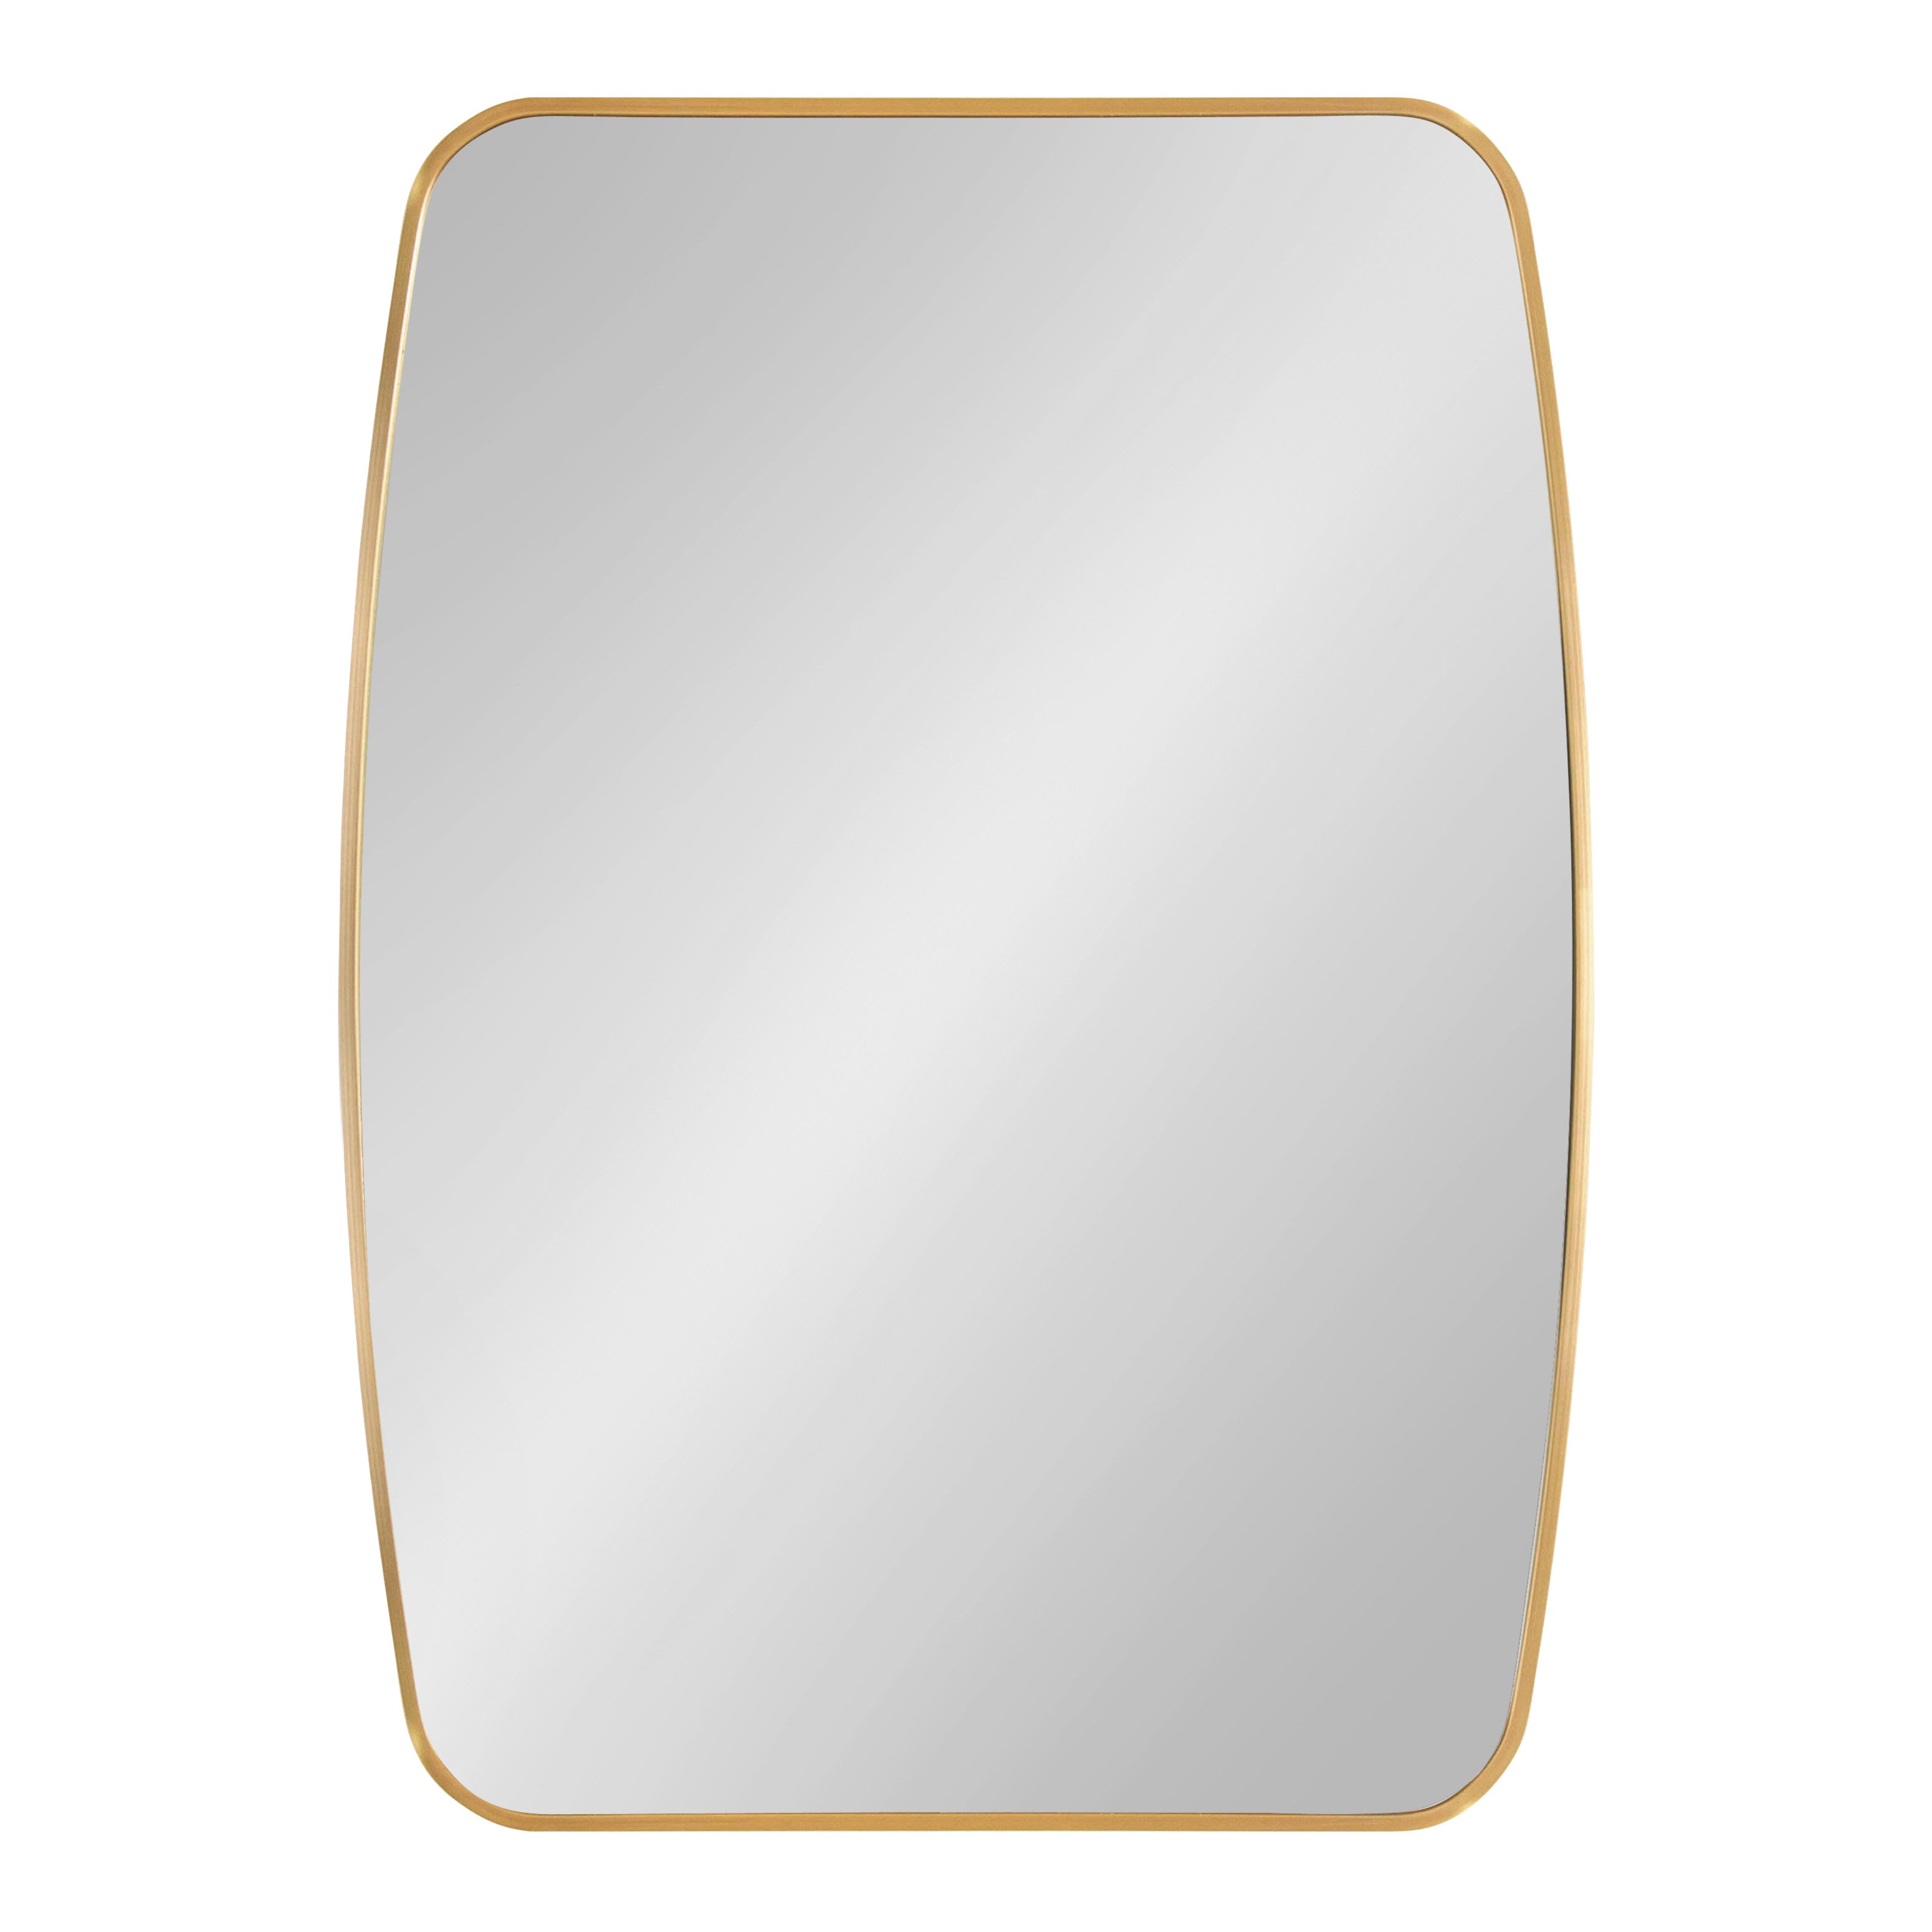 Zayda Metal Square Barrel Mirror